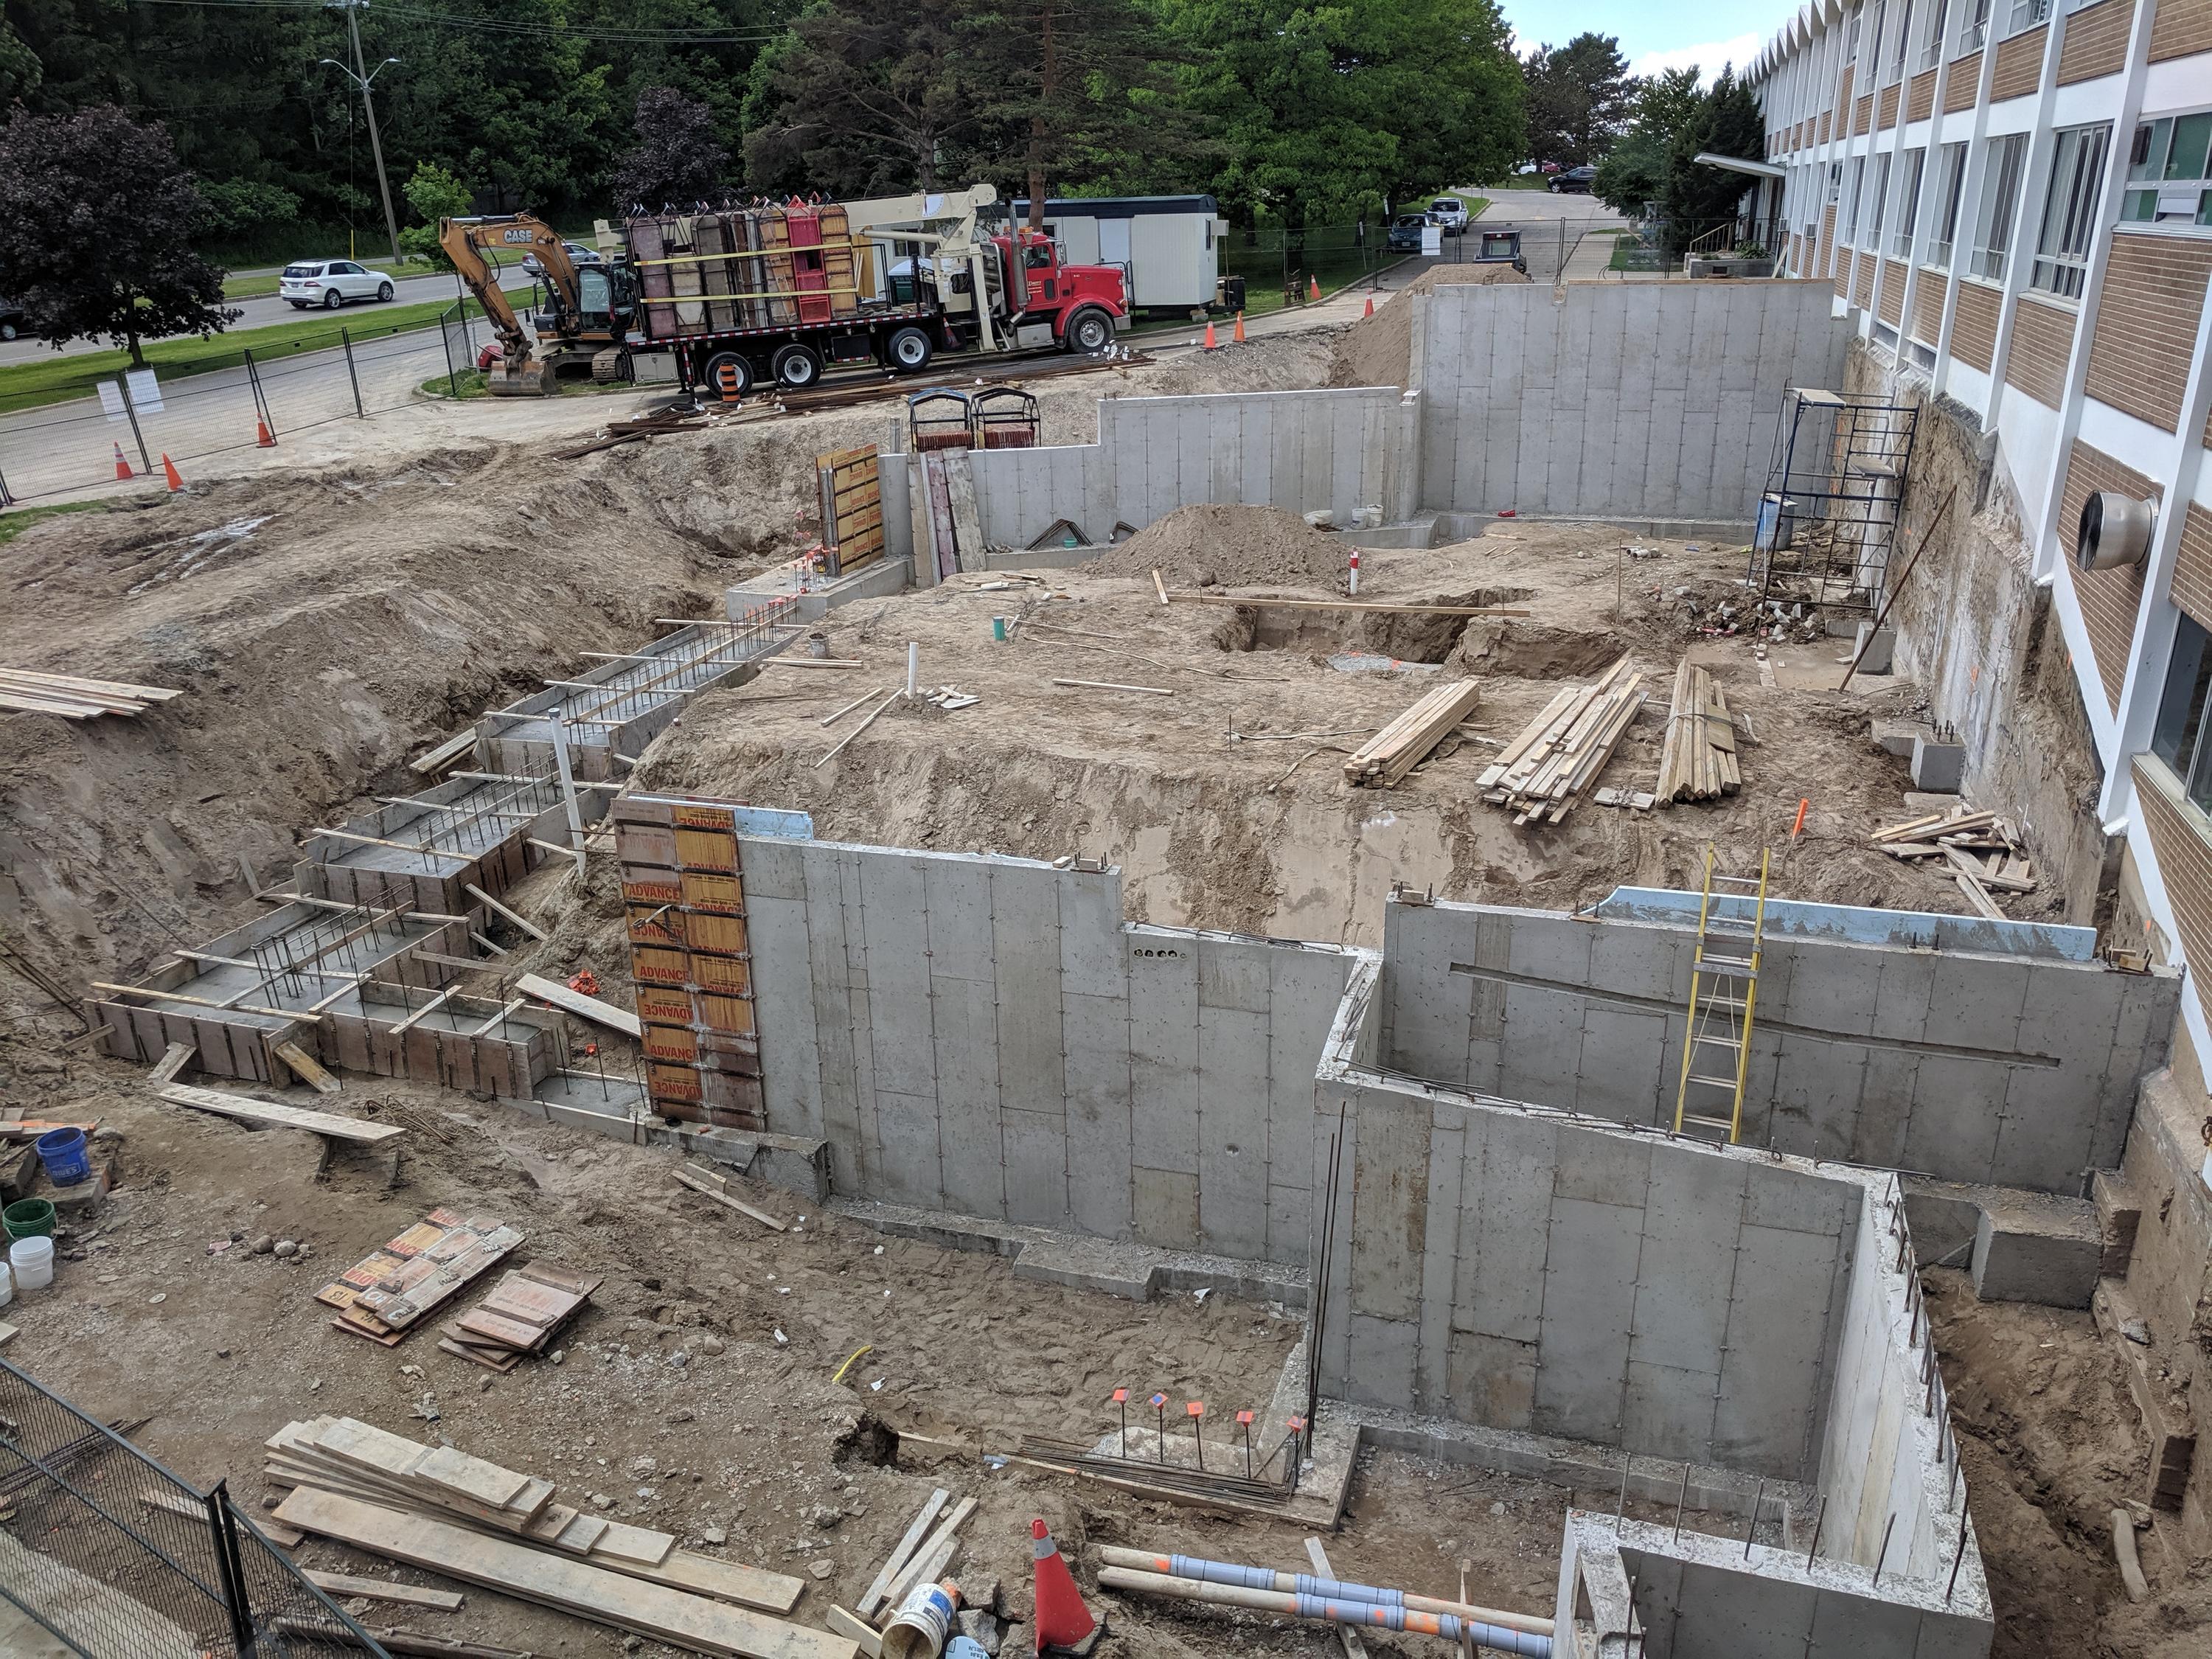 concrete walls go up during construction